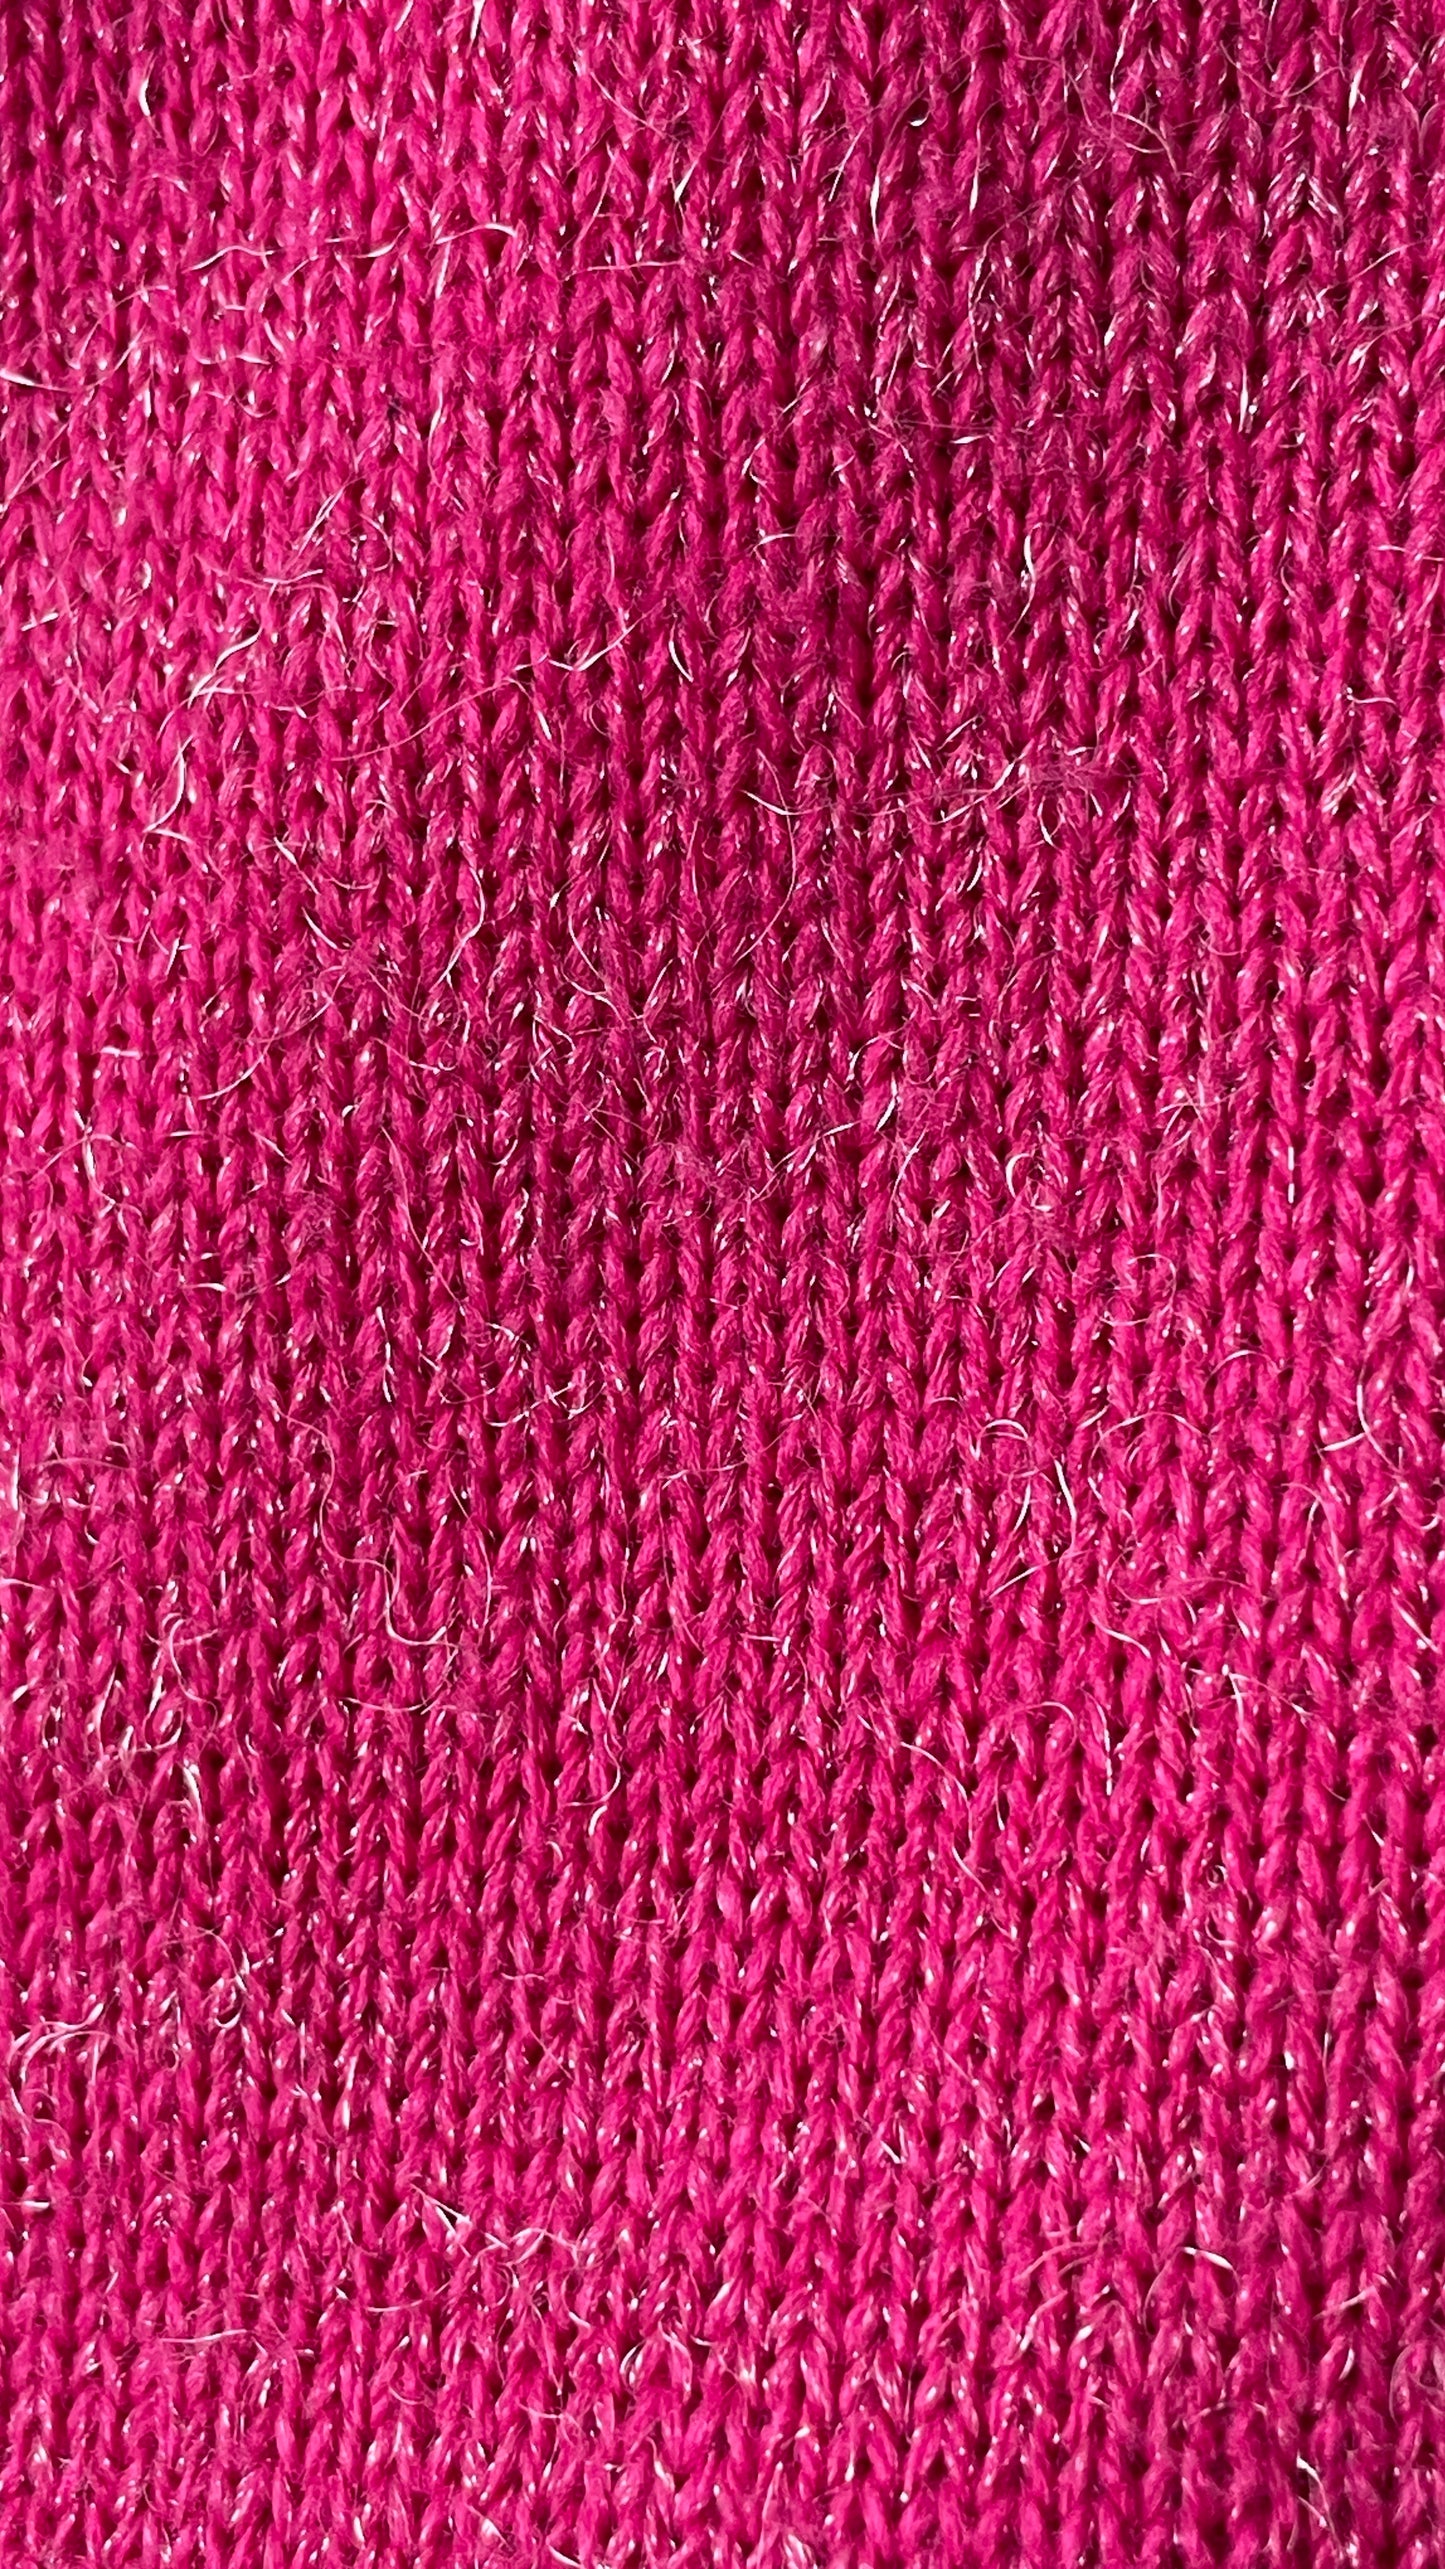 Hot pink jumper